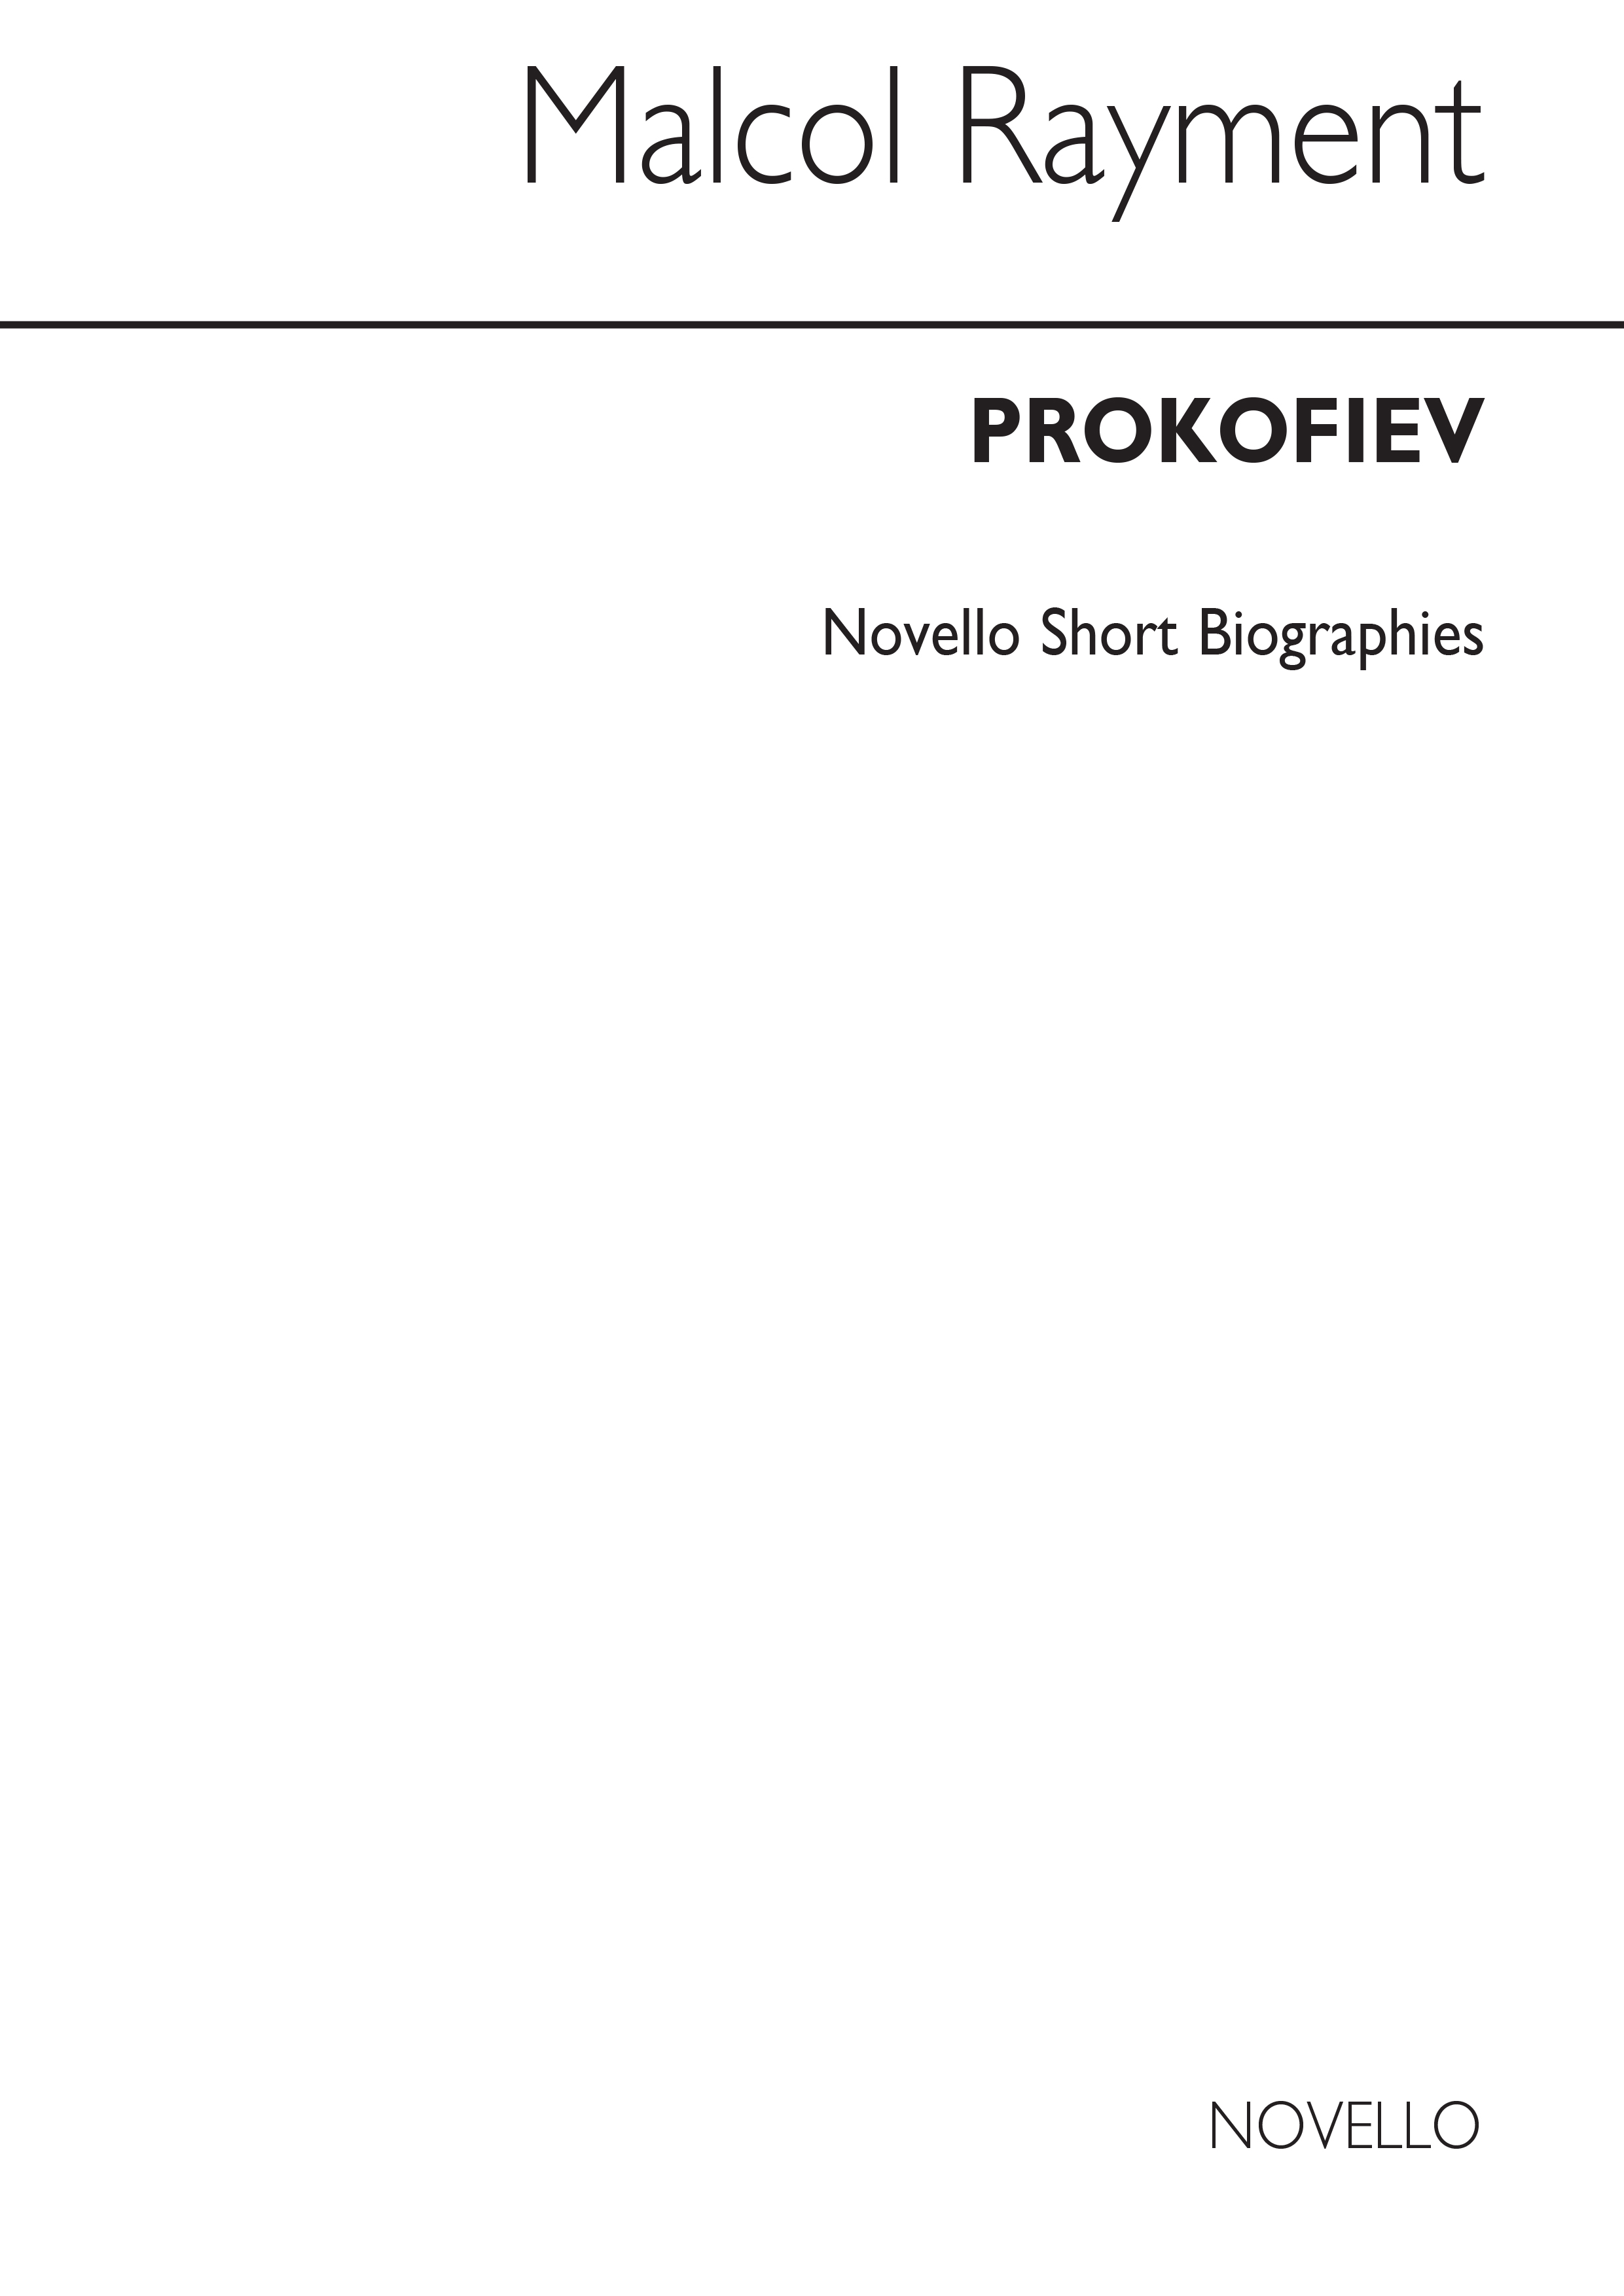 Sergei Prokofiev: Prokofiev Biography (Rayment)